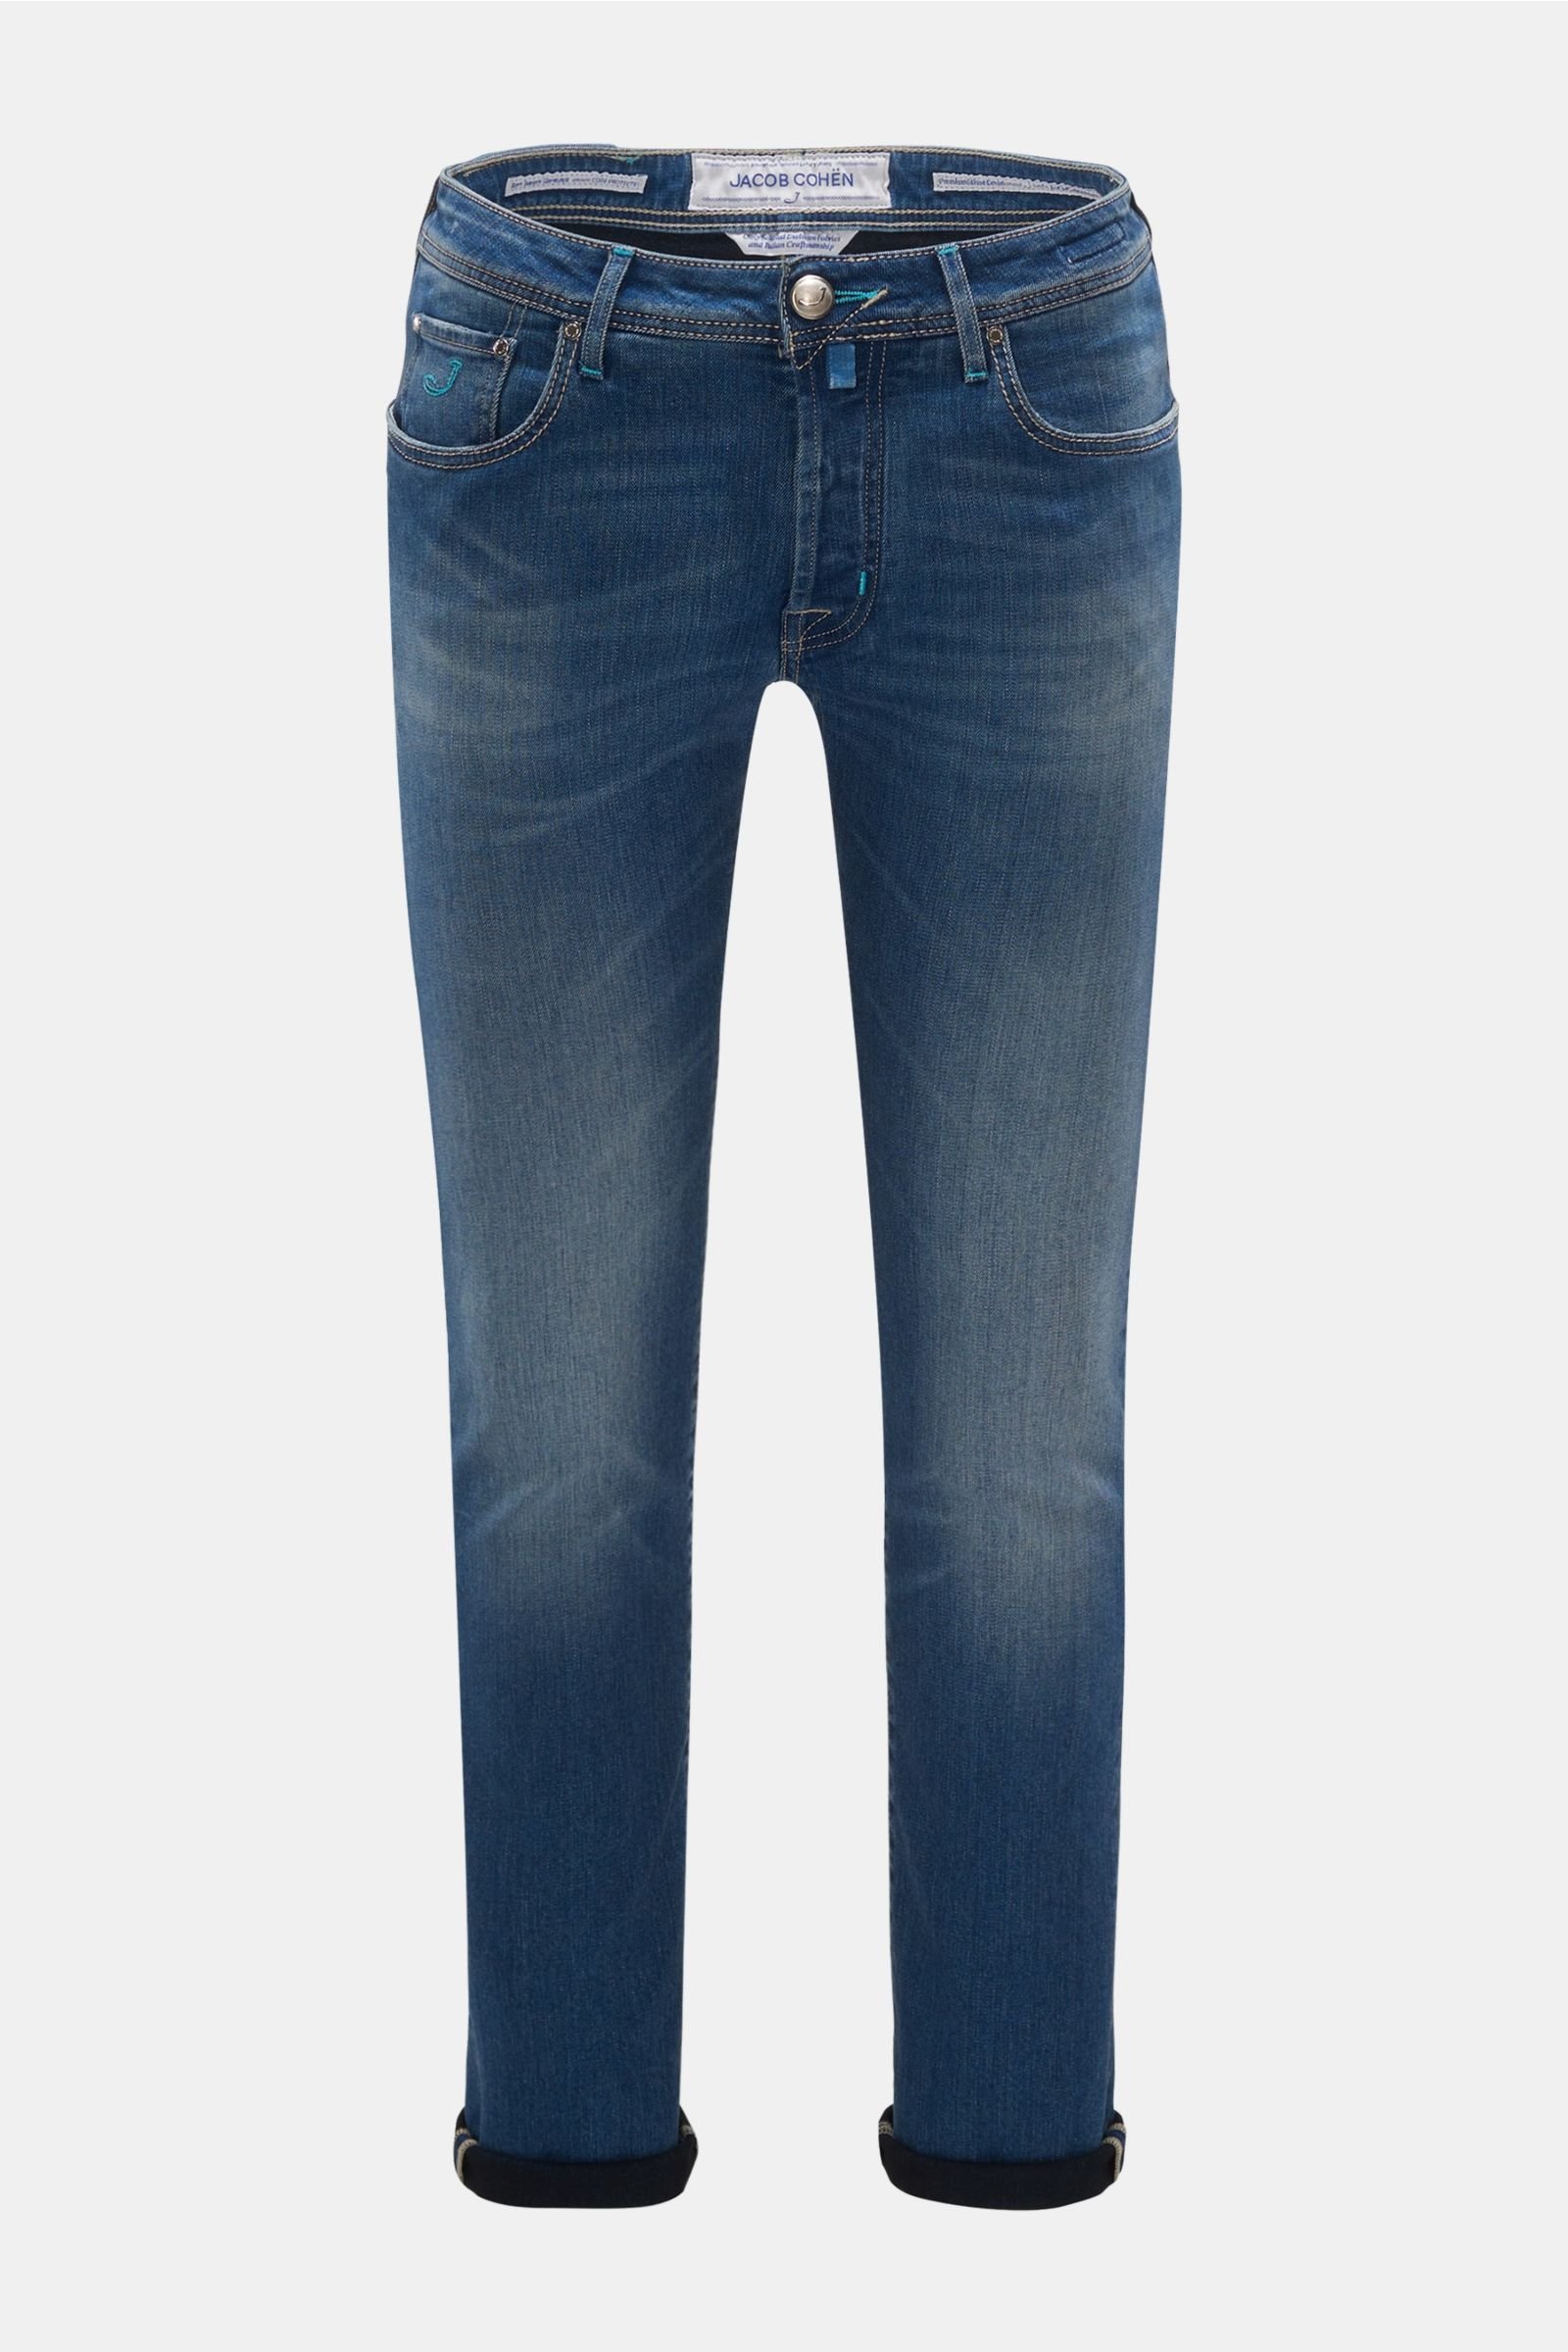 Jeans 'J688 Comfort Slim Fit' graublau